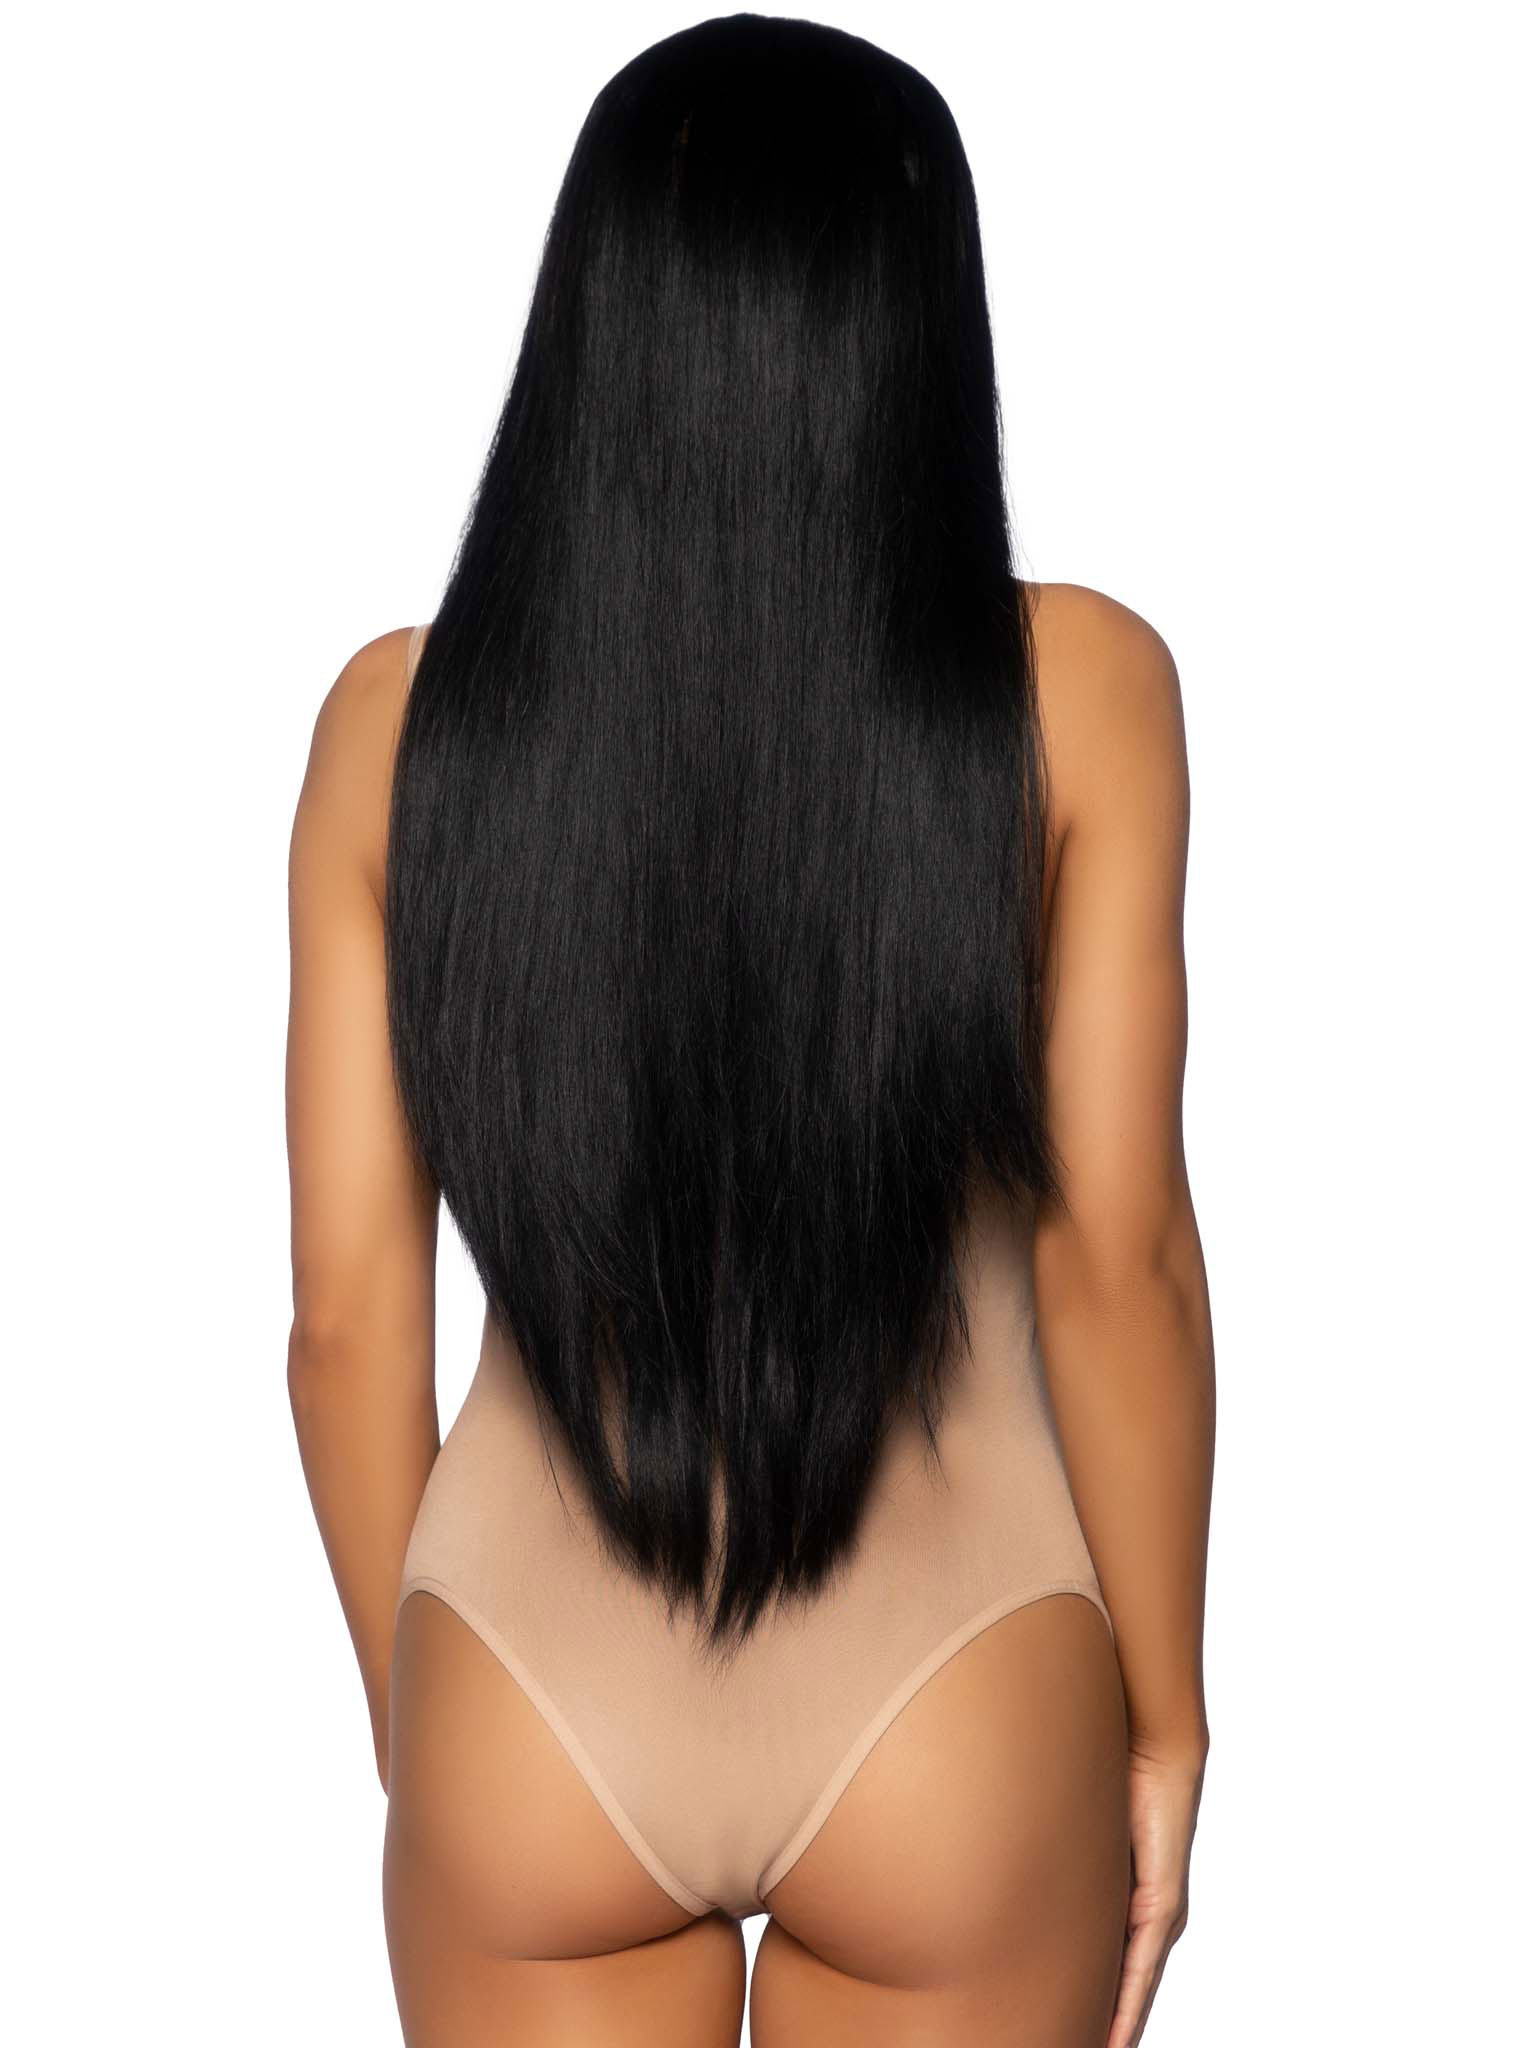 inch long straight wig black 